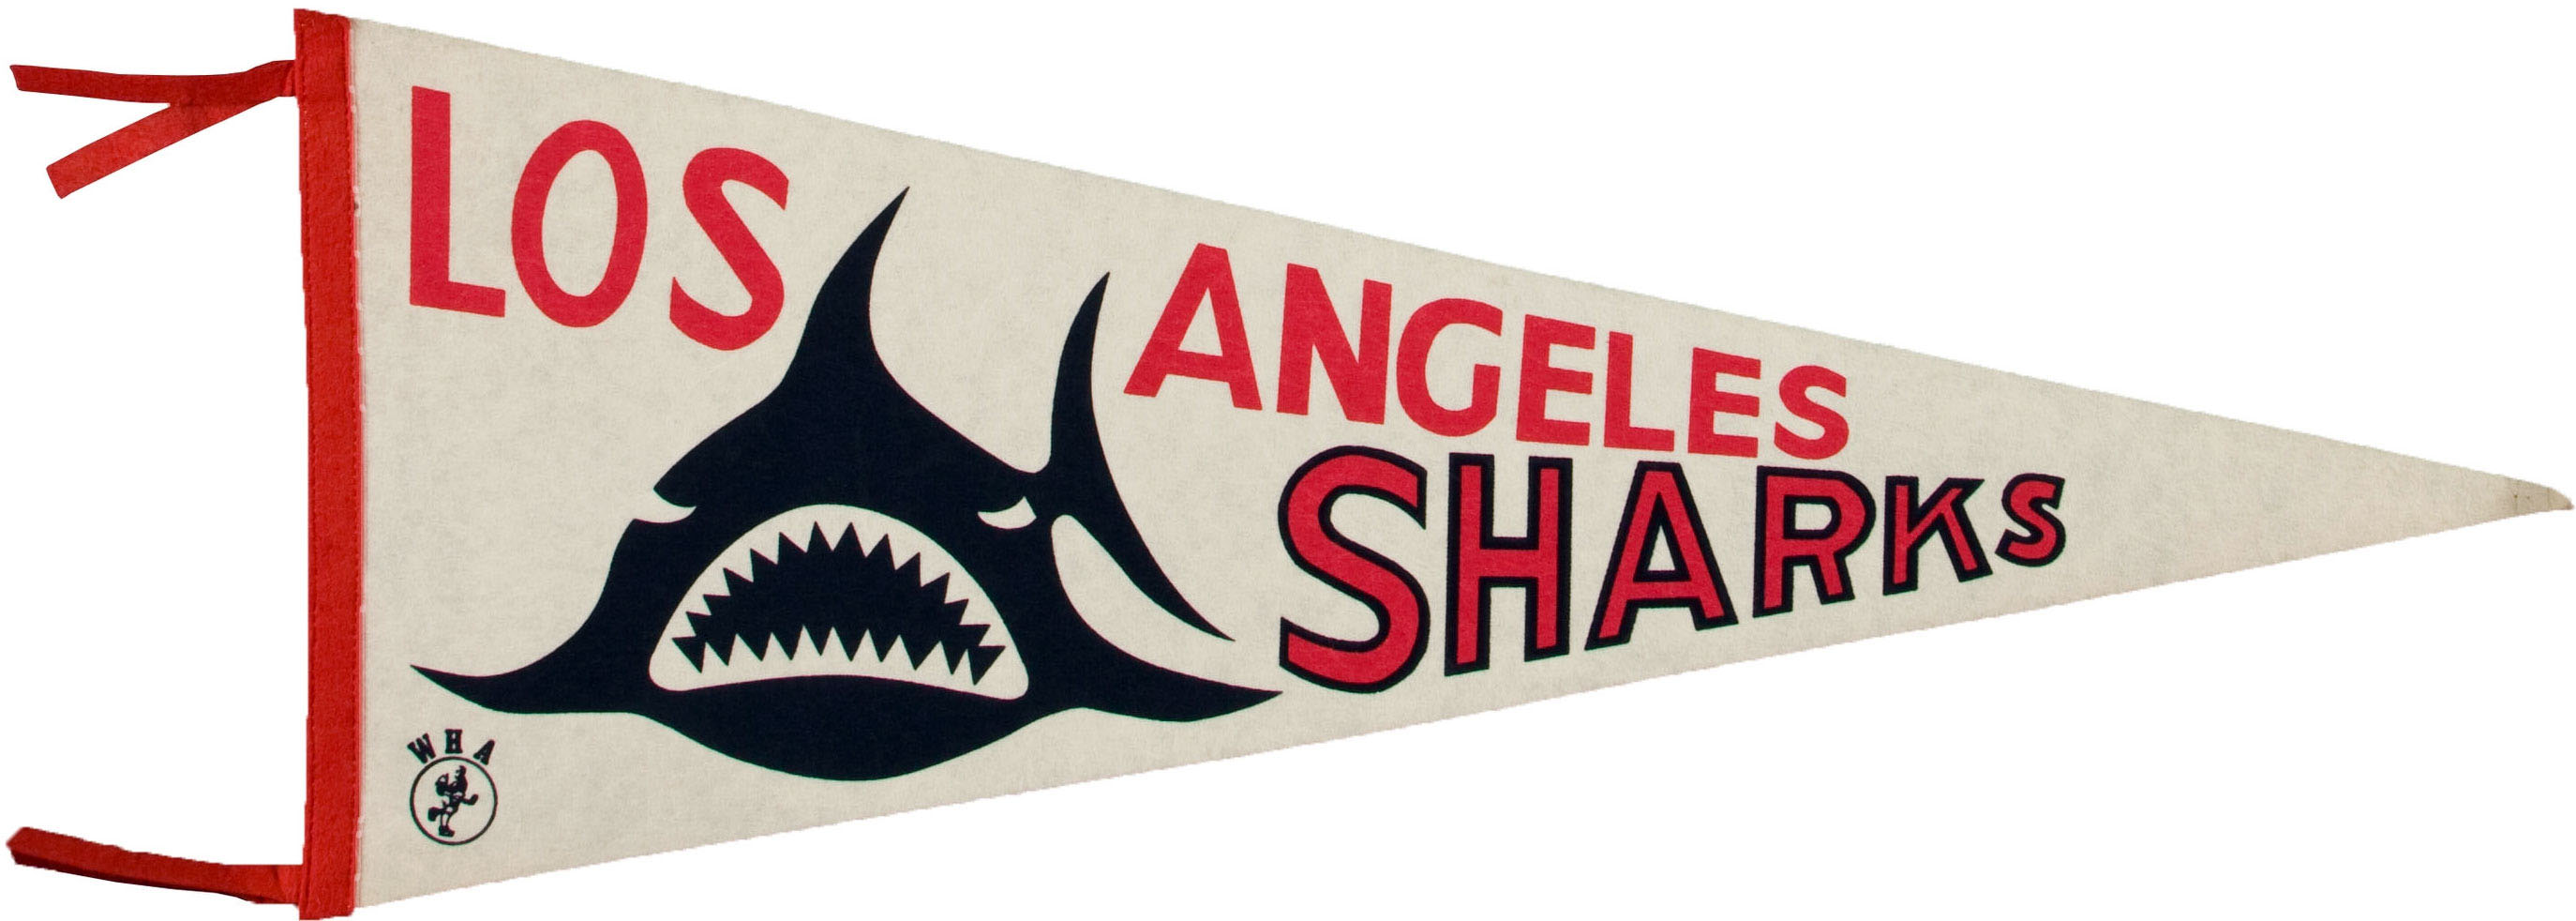 Los Angeles Sharks pennant